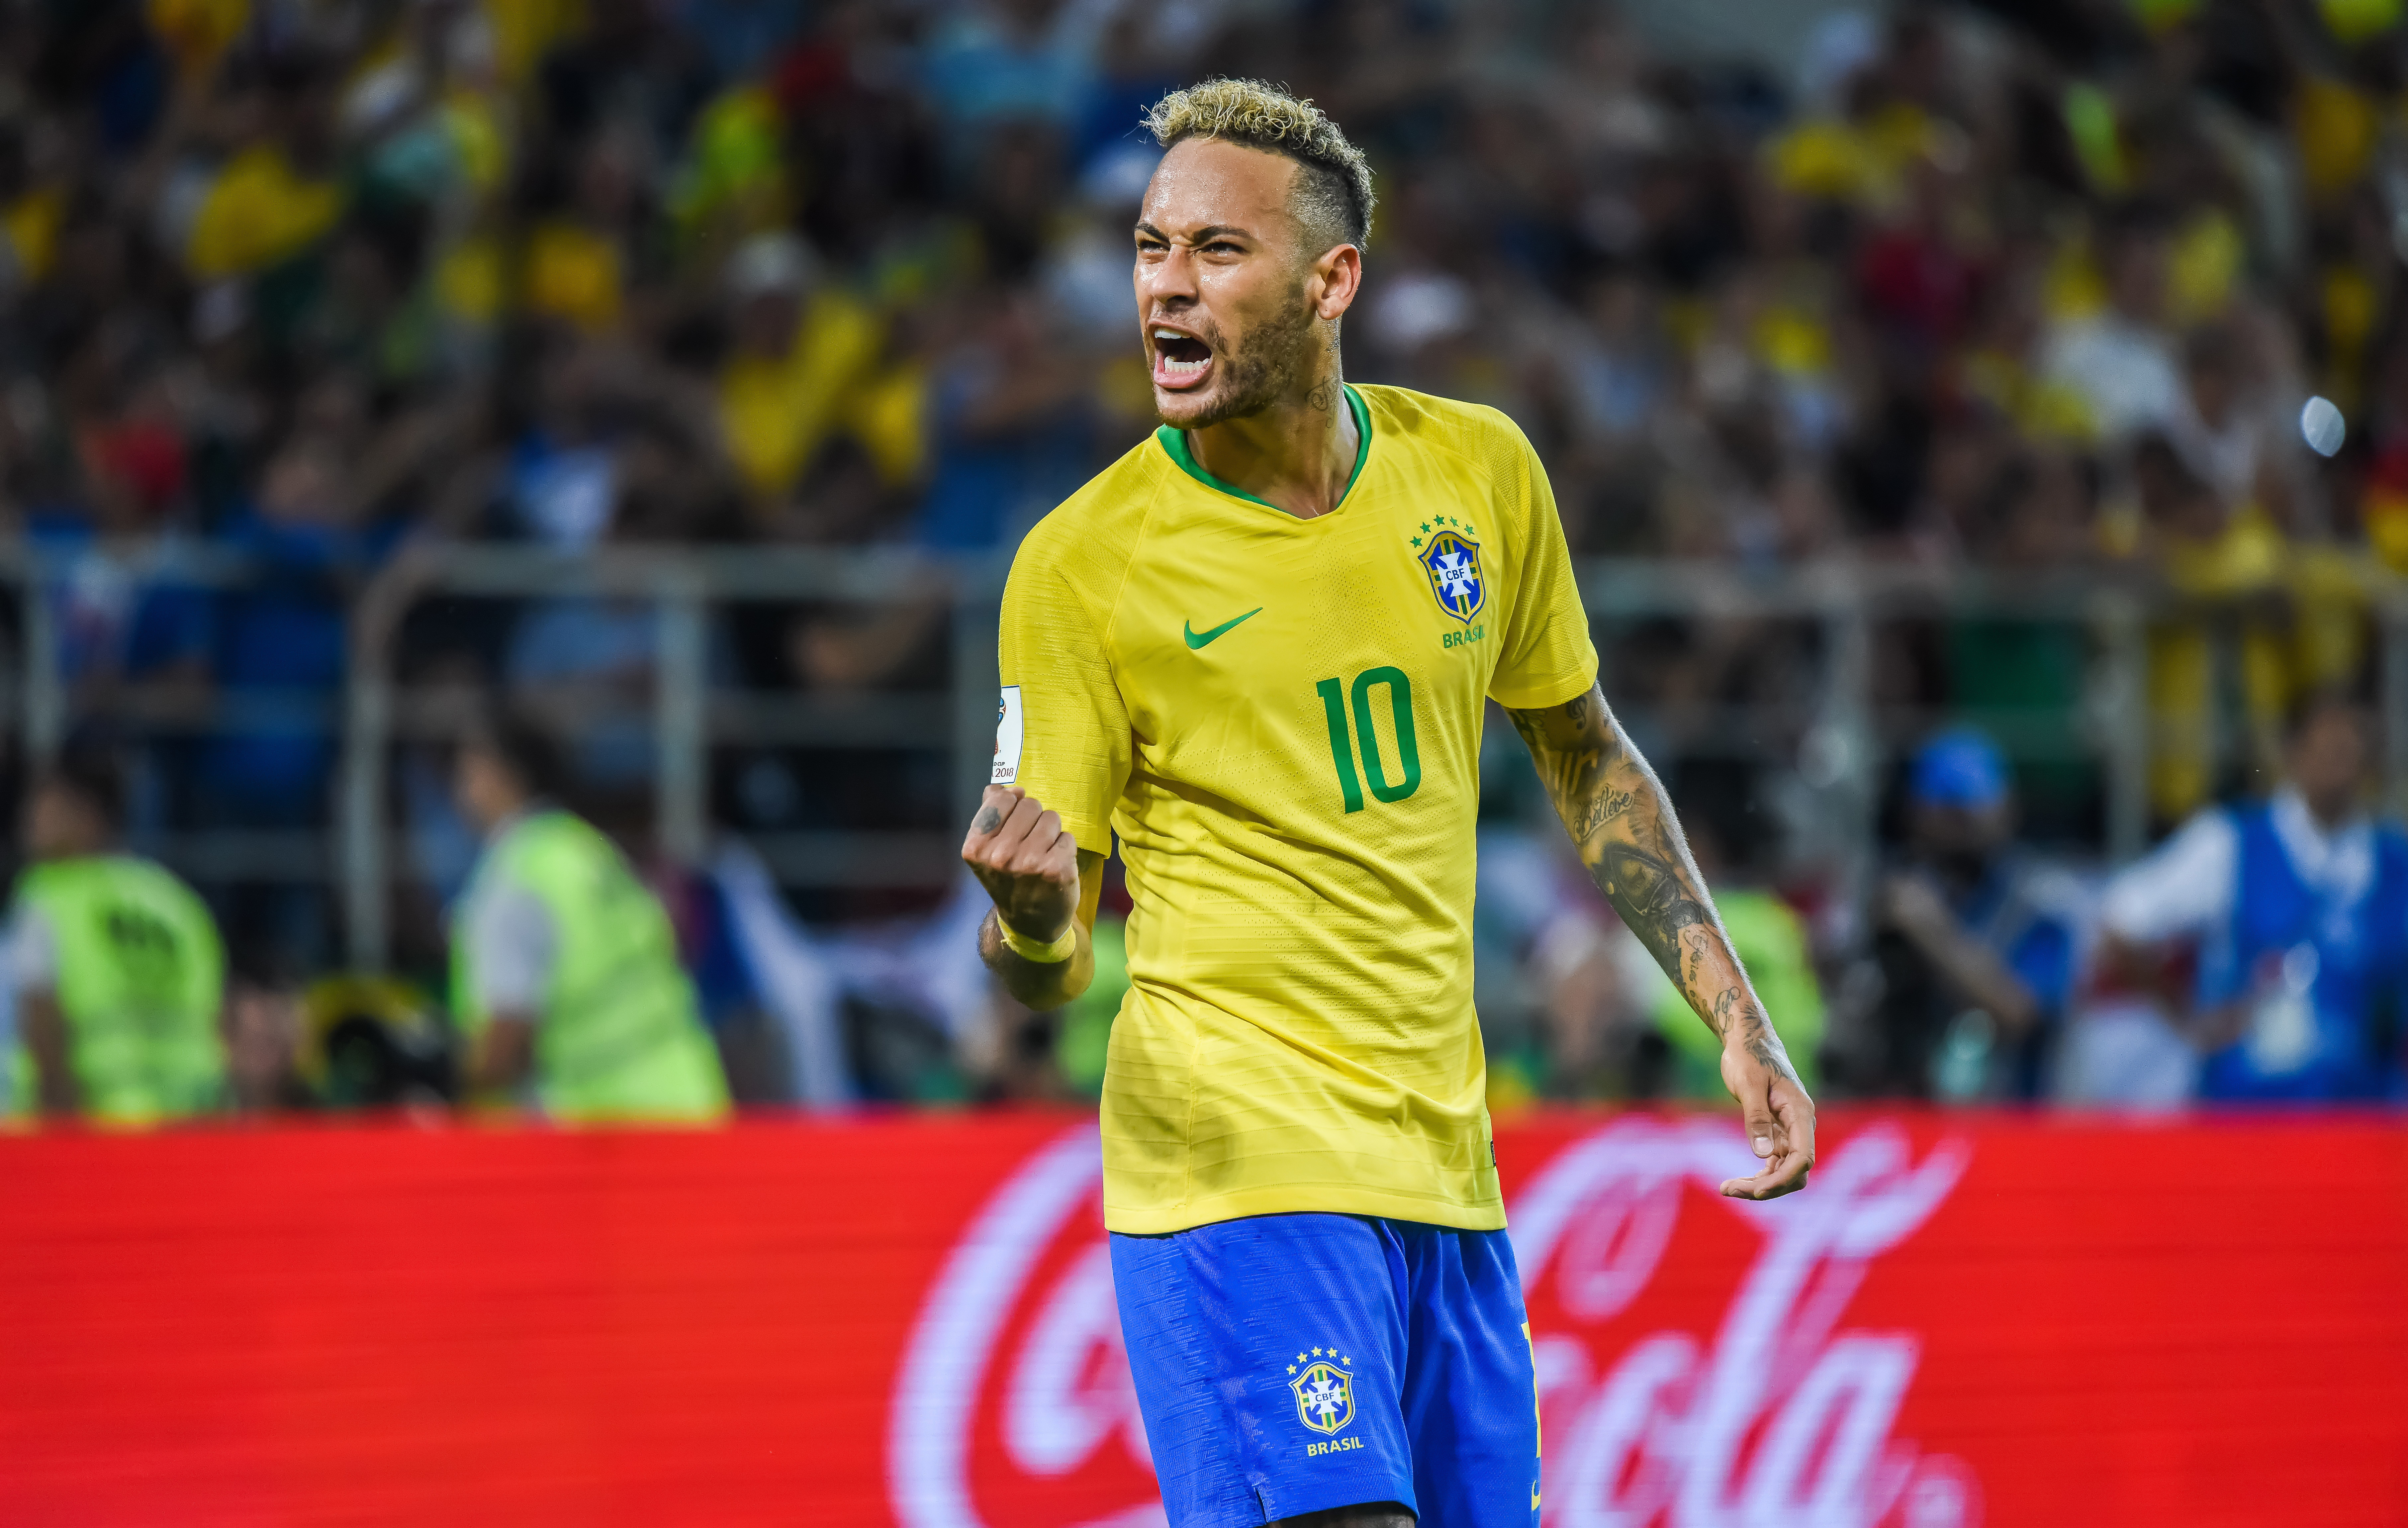 neymar 2019 cleats